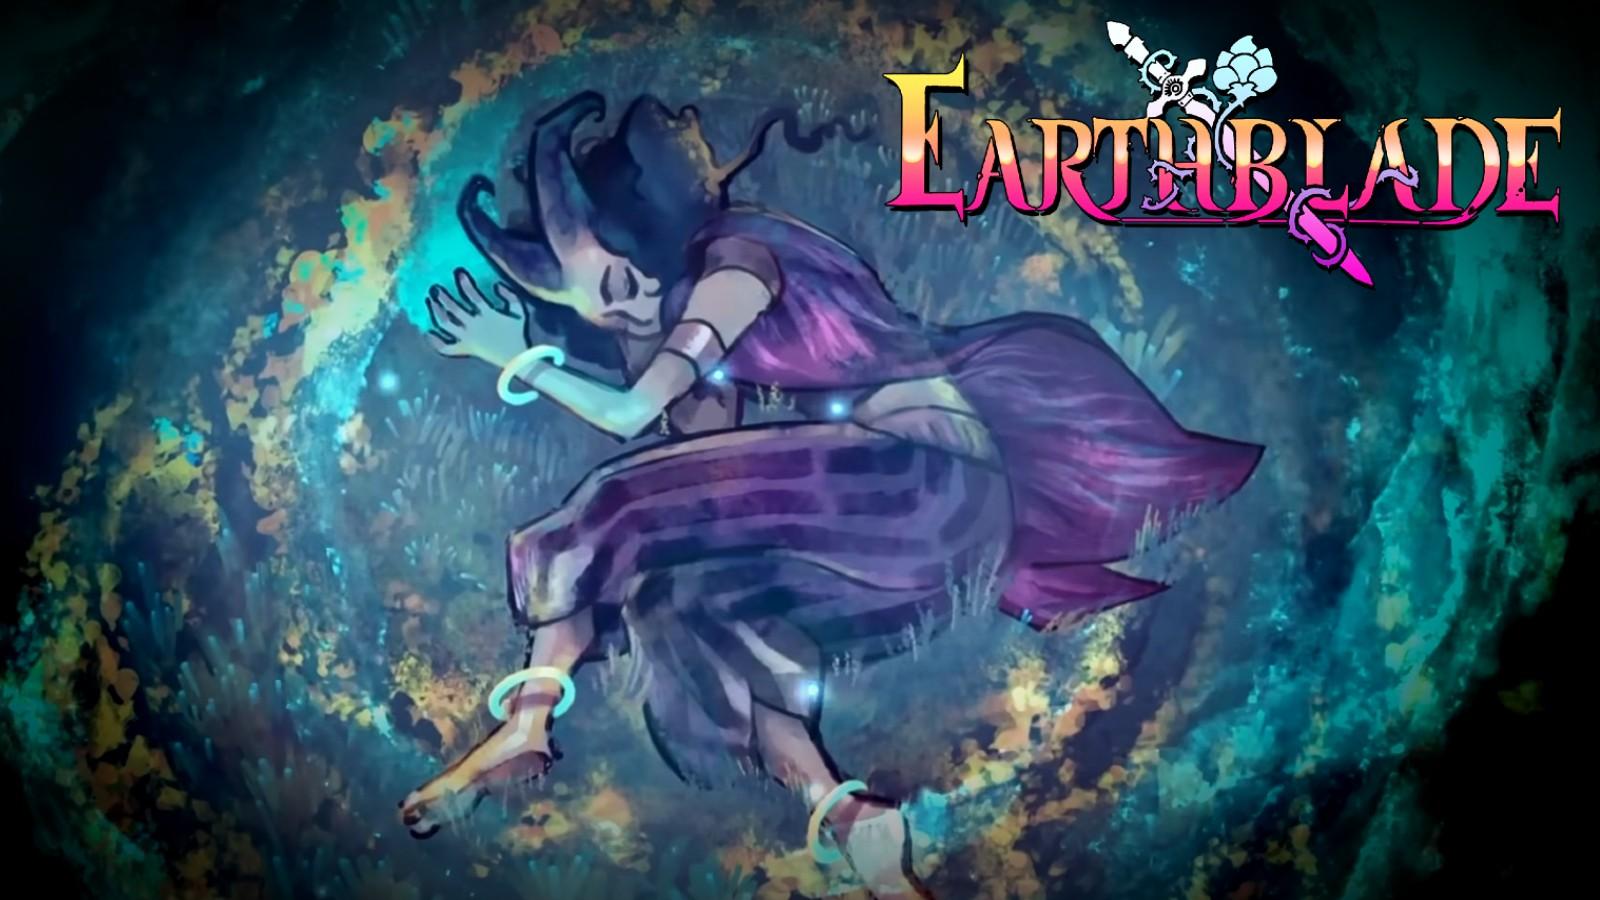 Earthblade 2D action game